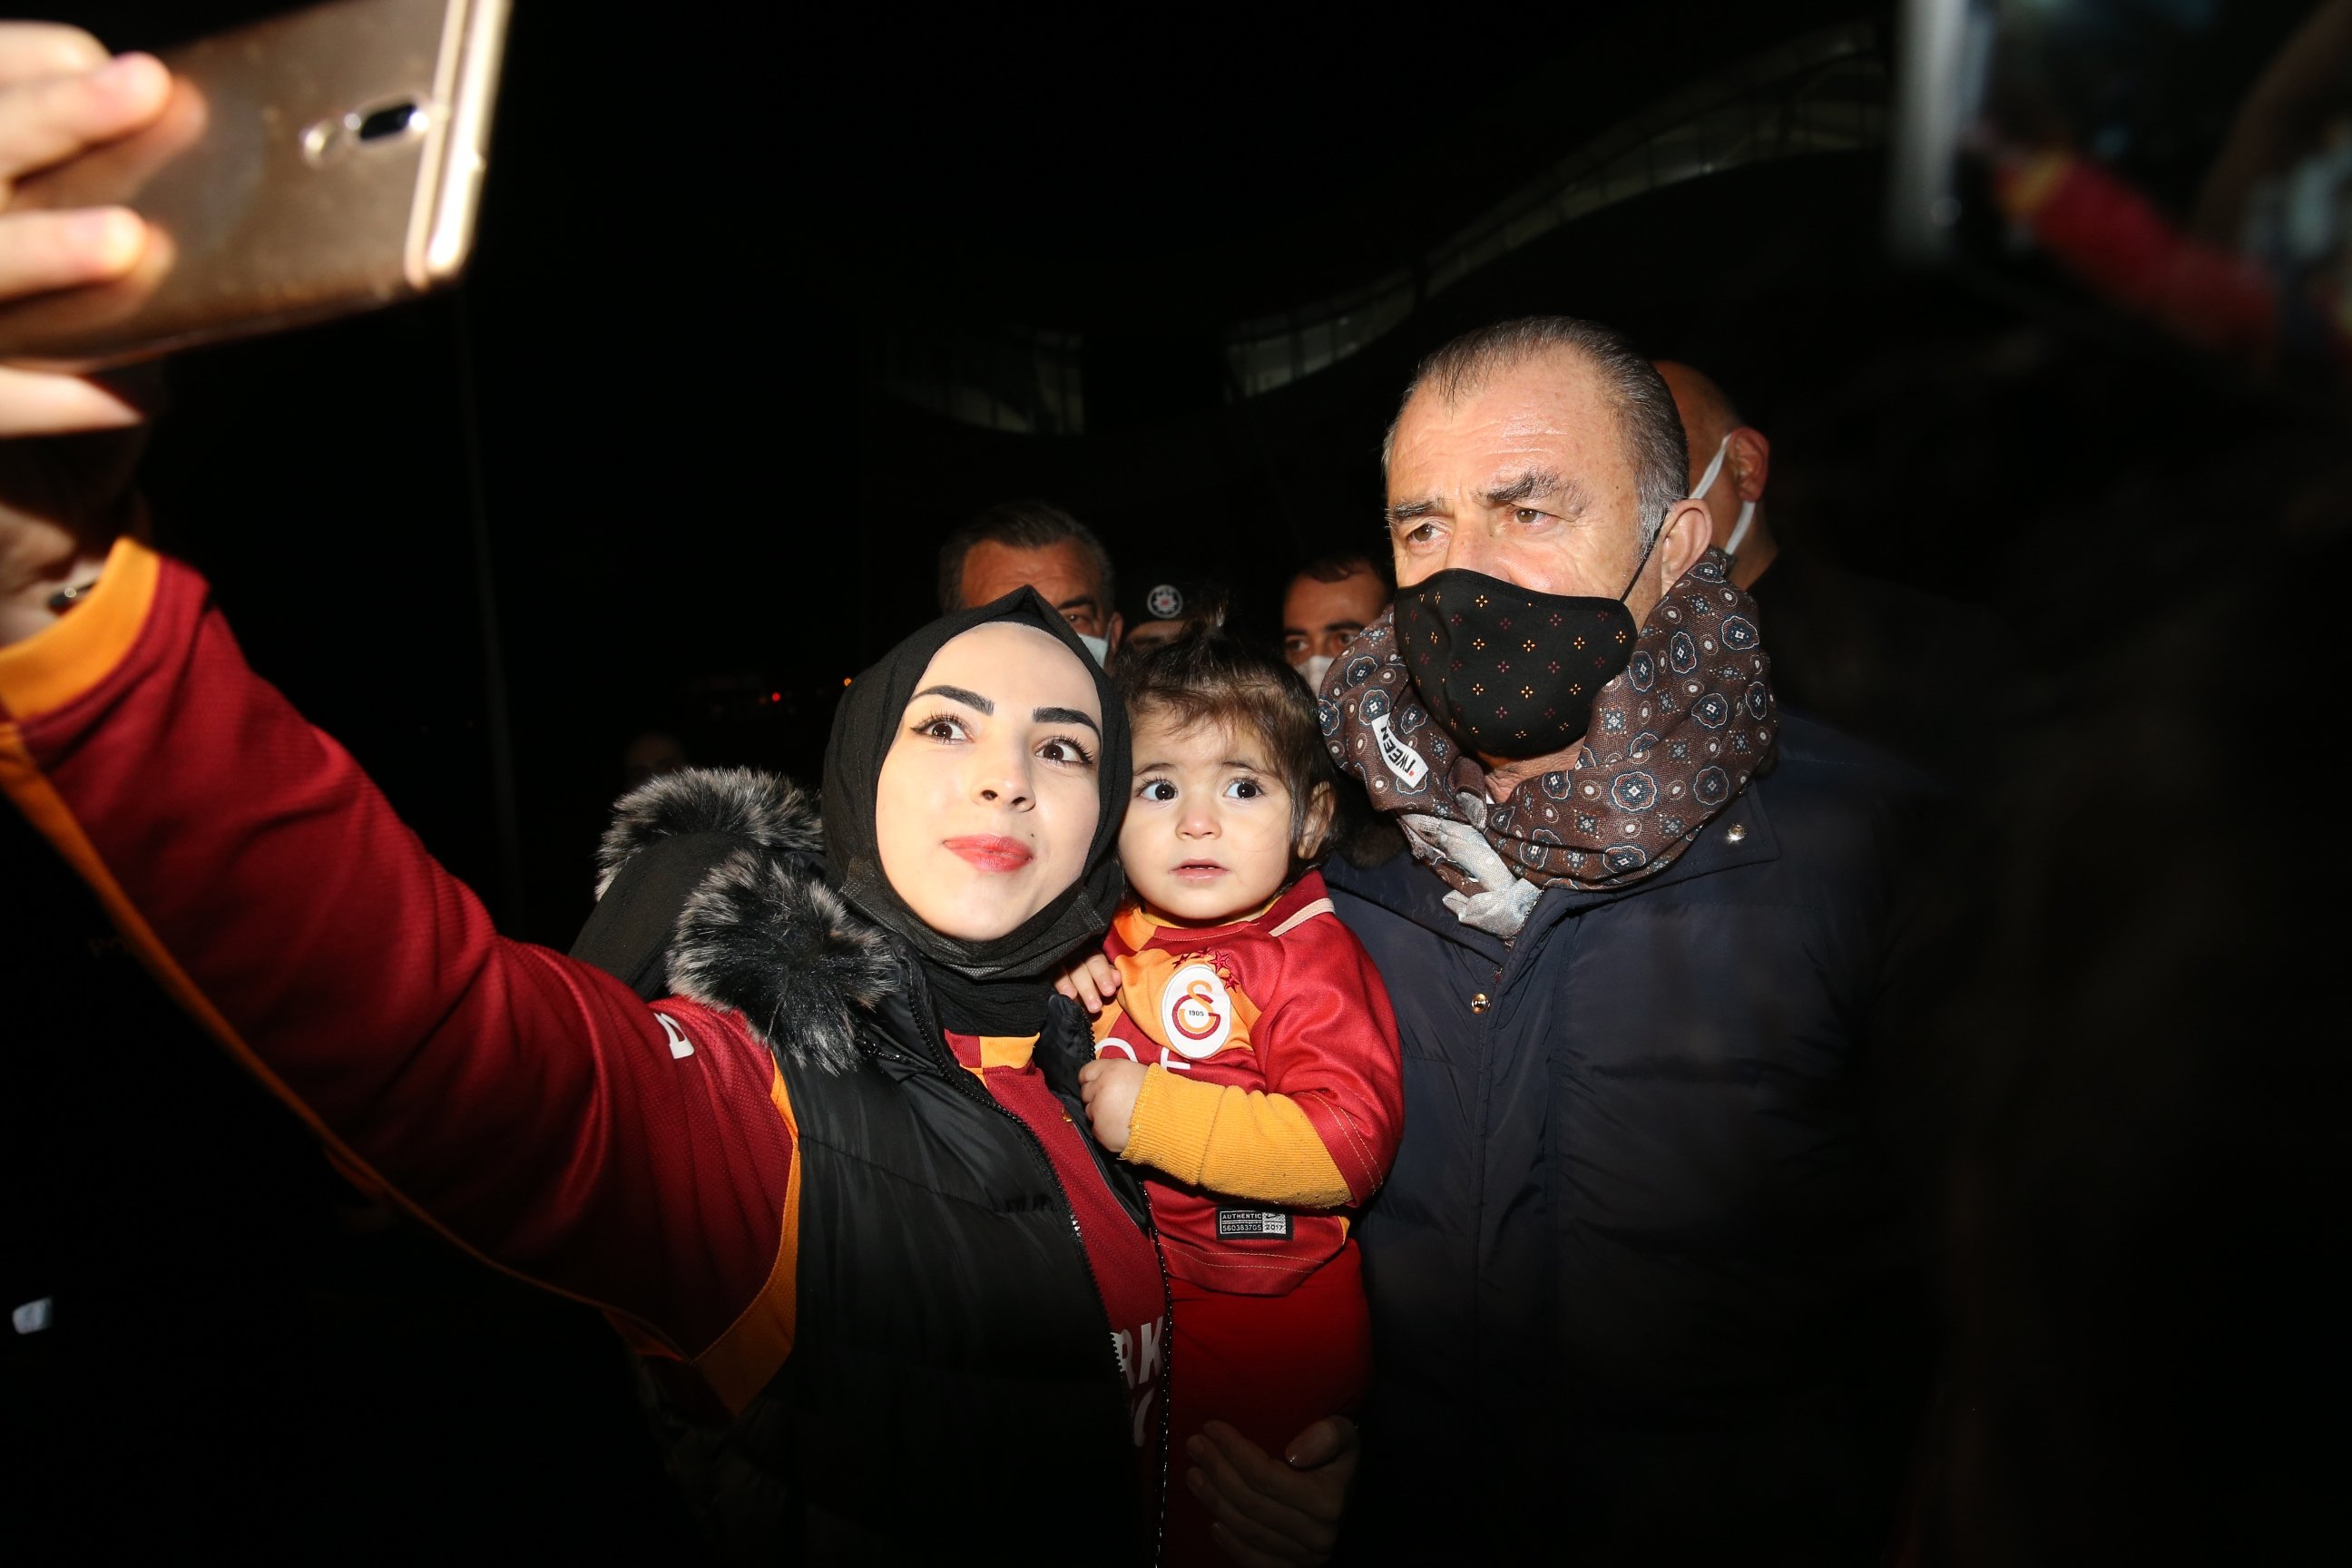 Galatasaray coach Fatih Terim takes photos with fans, Sivas, Turkey, Dec. 12, 2021. (AA Photo)